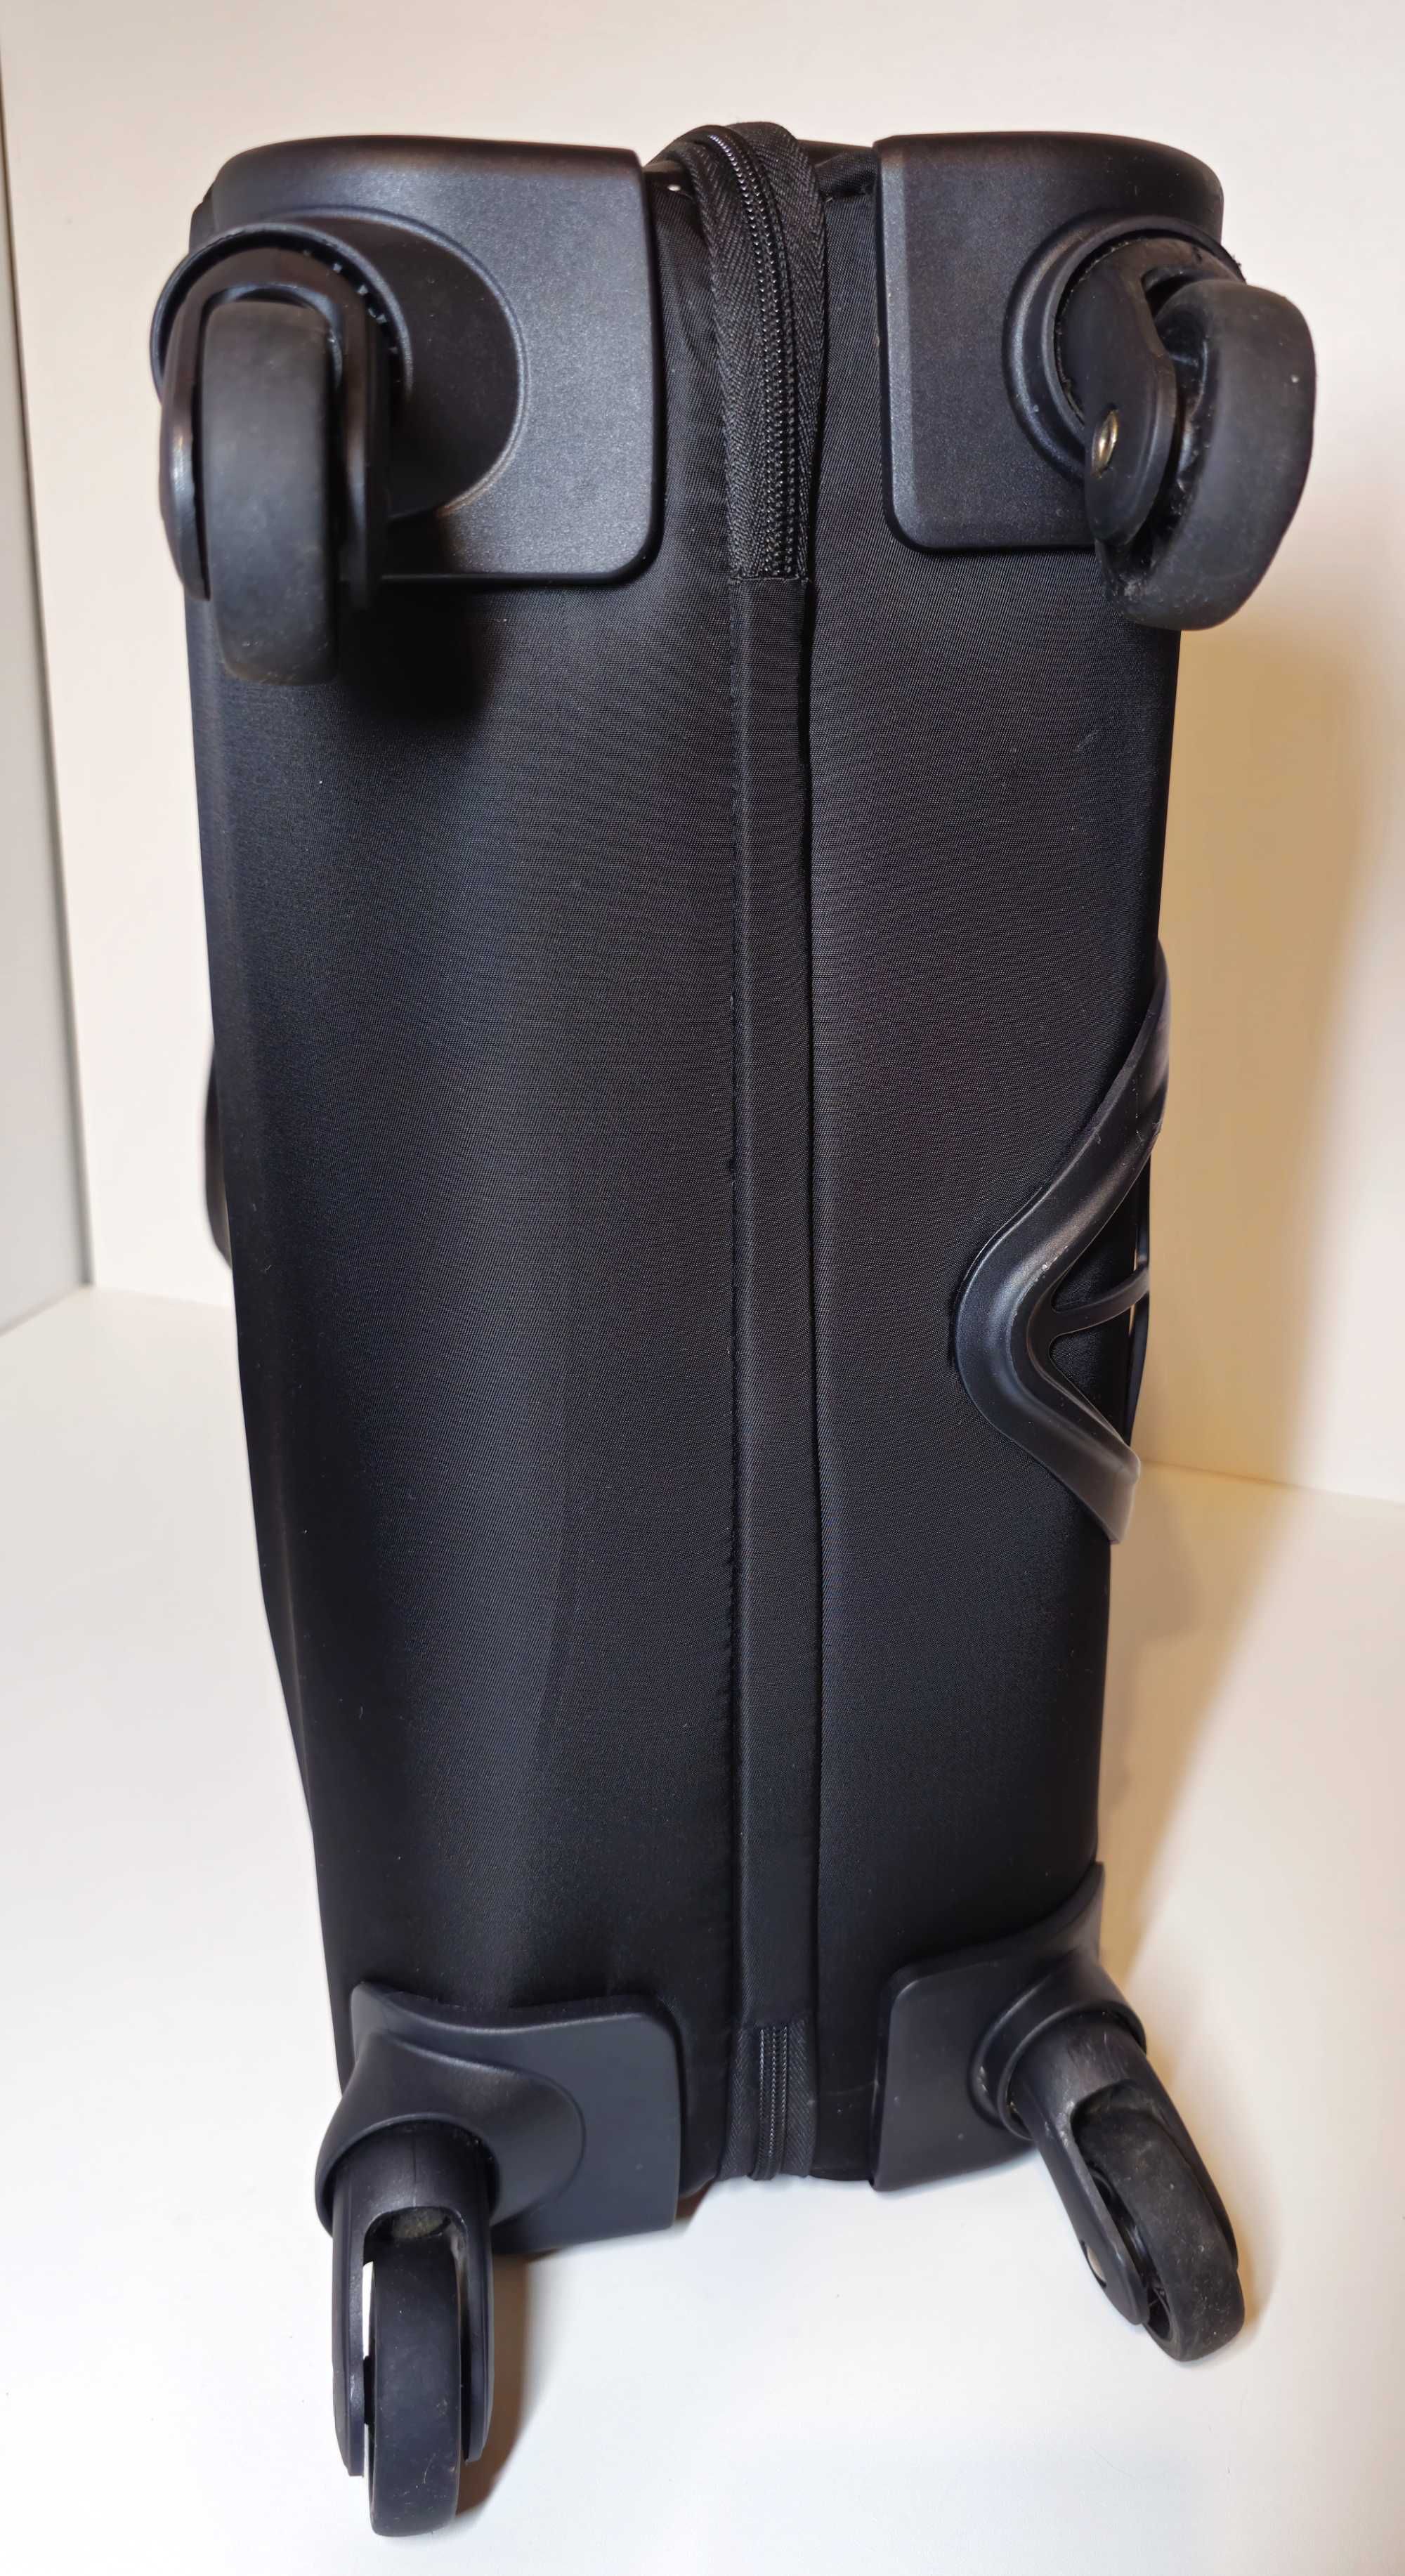 Куфар за ръчен багаж Samsonite